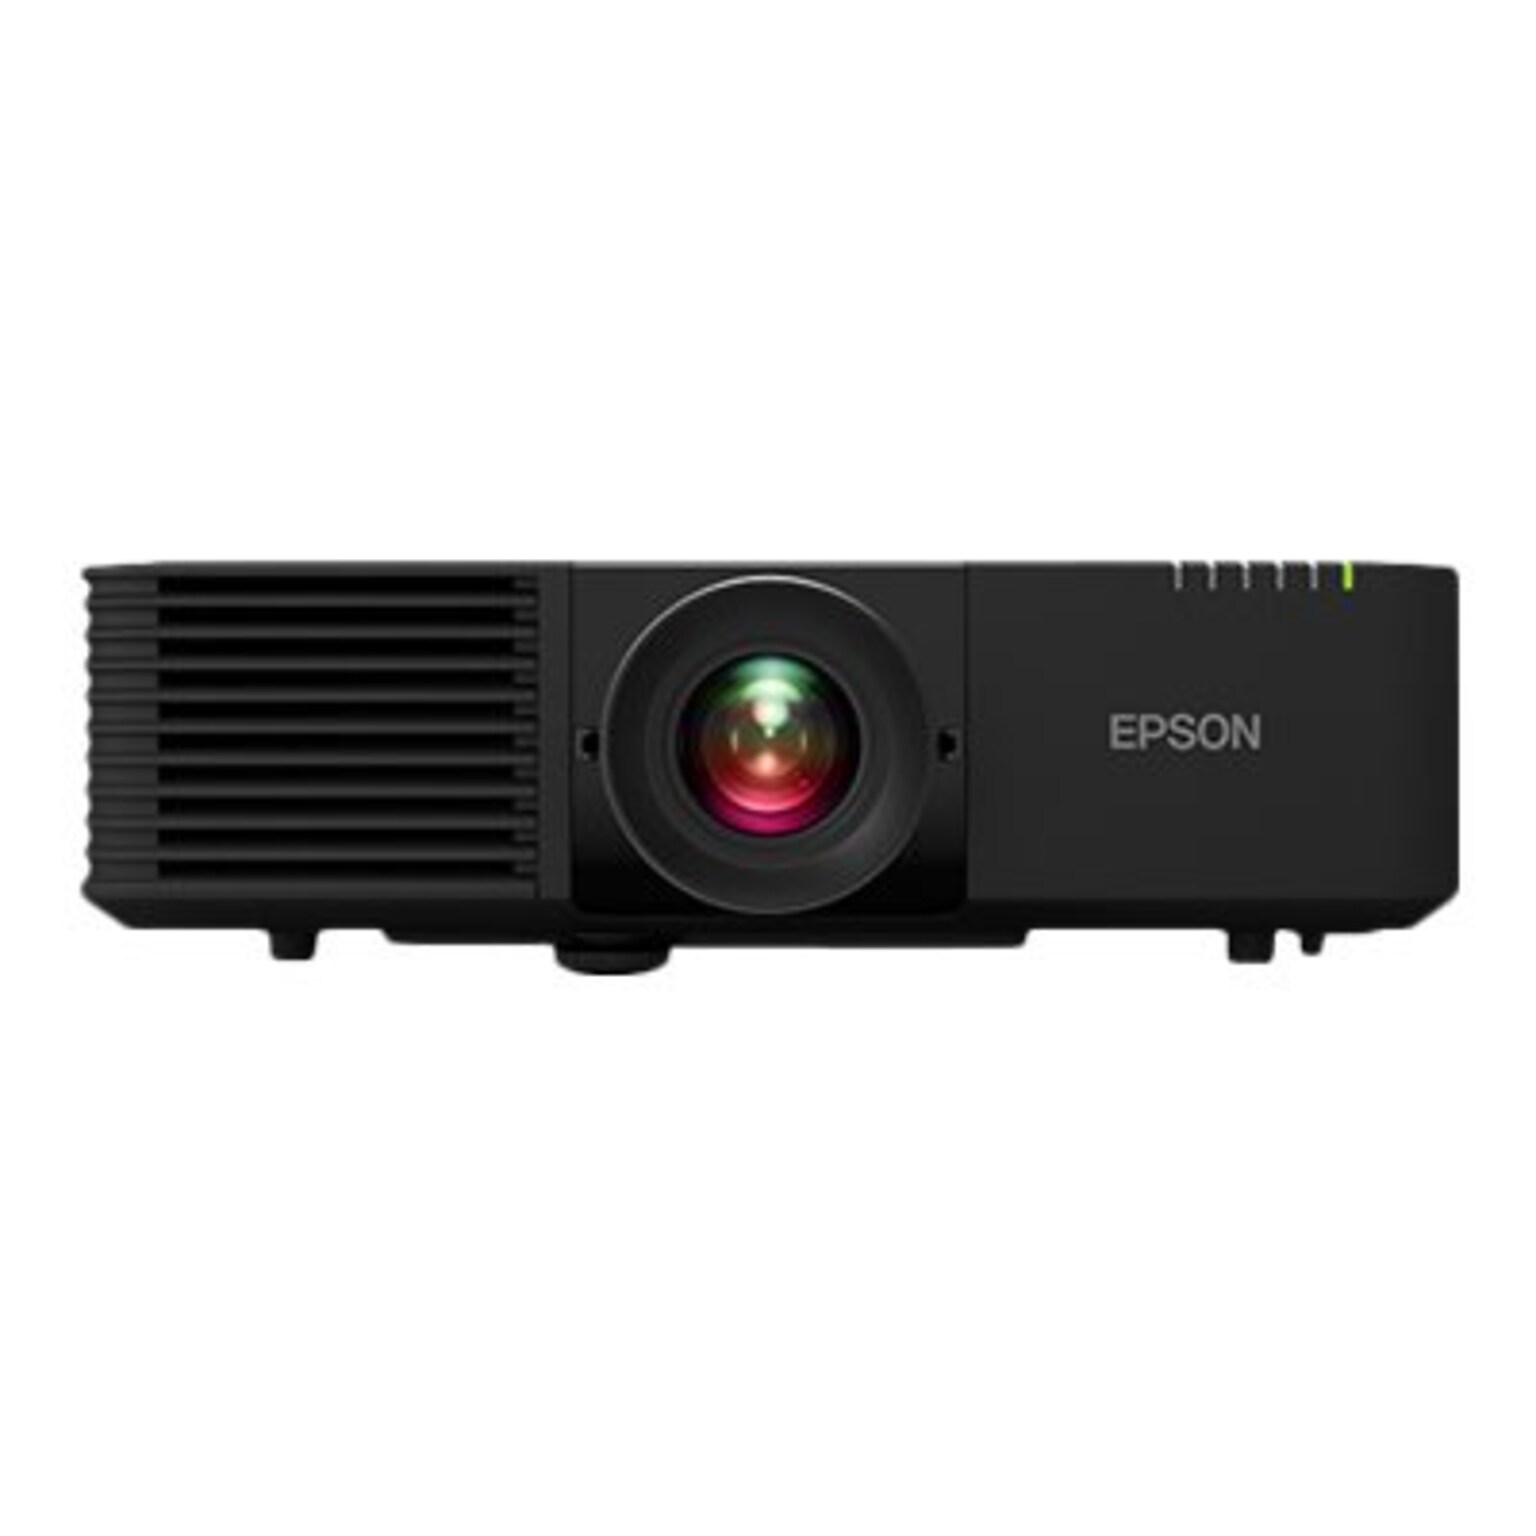 Epson PowerLite L735U Business (V11HA25120) LCD Projector, Black